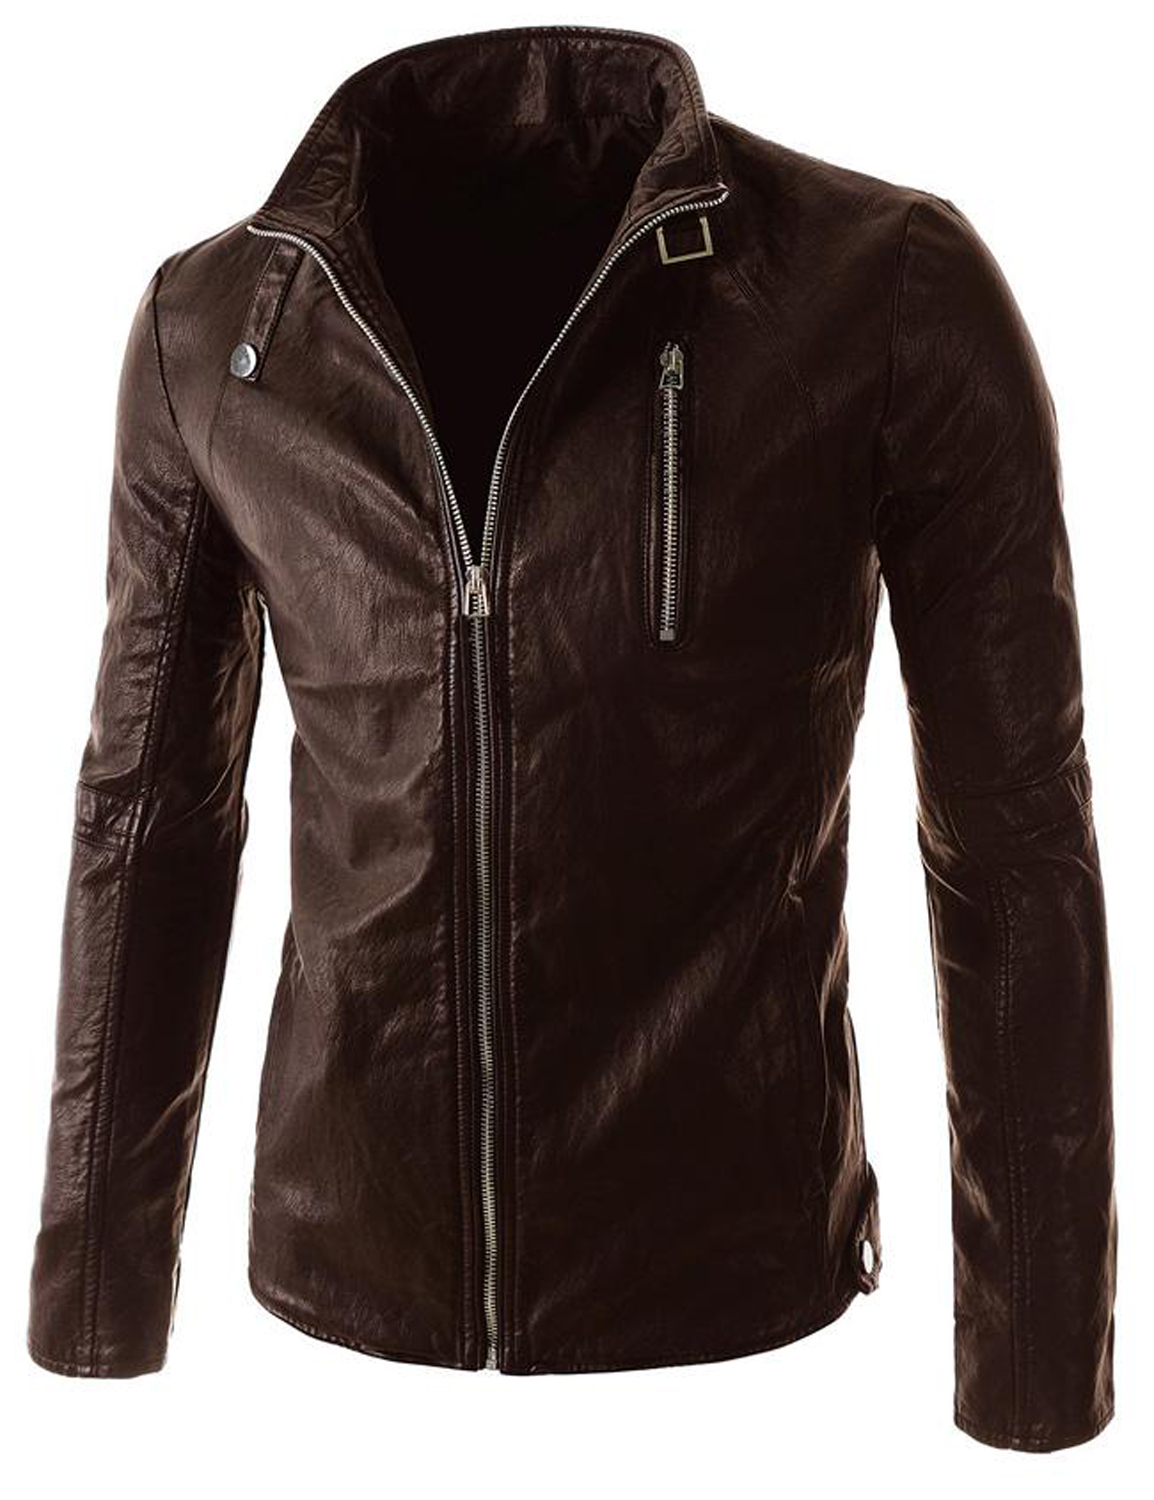 Buy Mozri 100 Percent Genuine Leather Brown Jacket for Men's Online ...